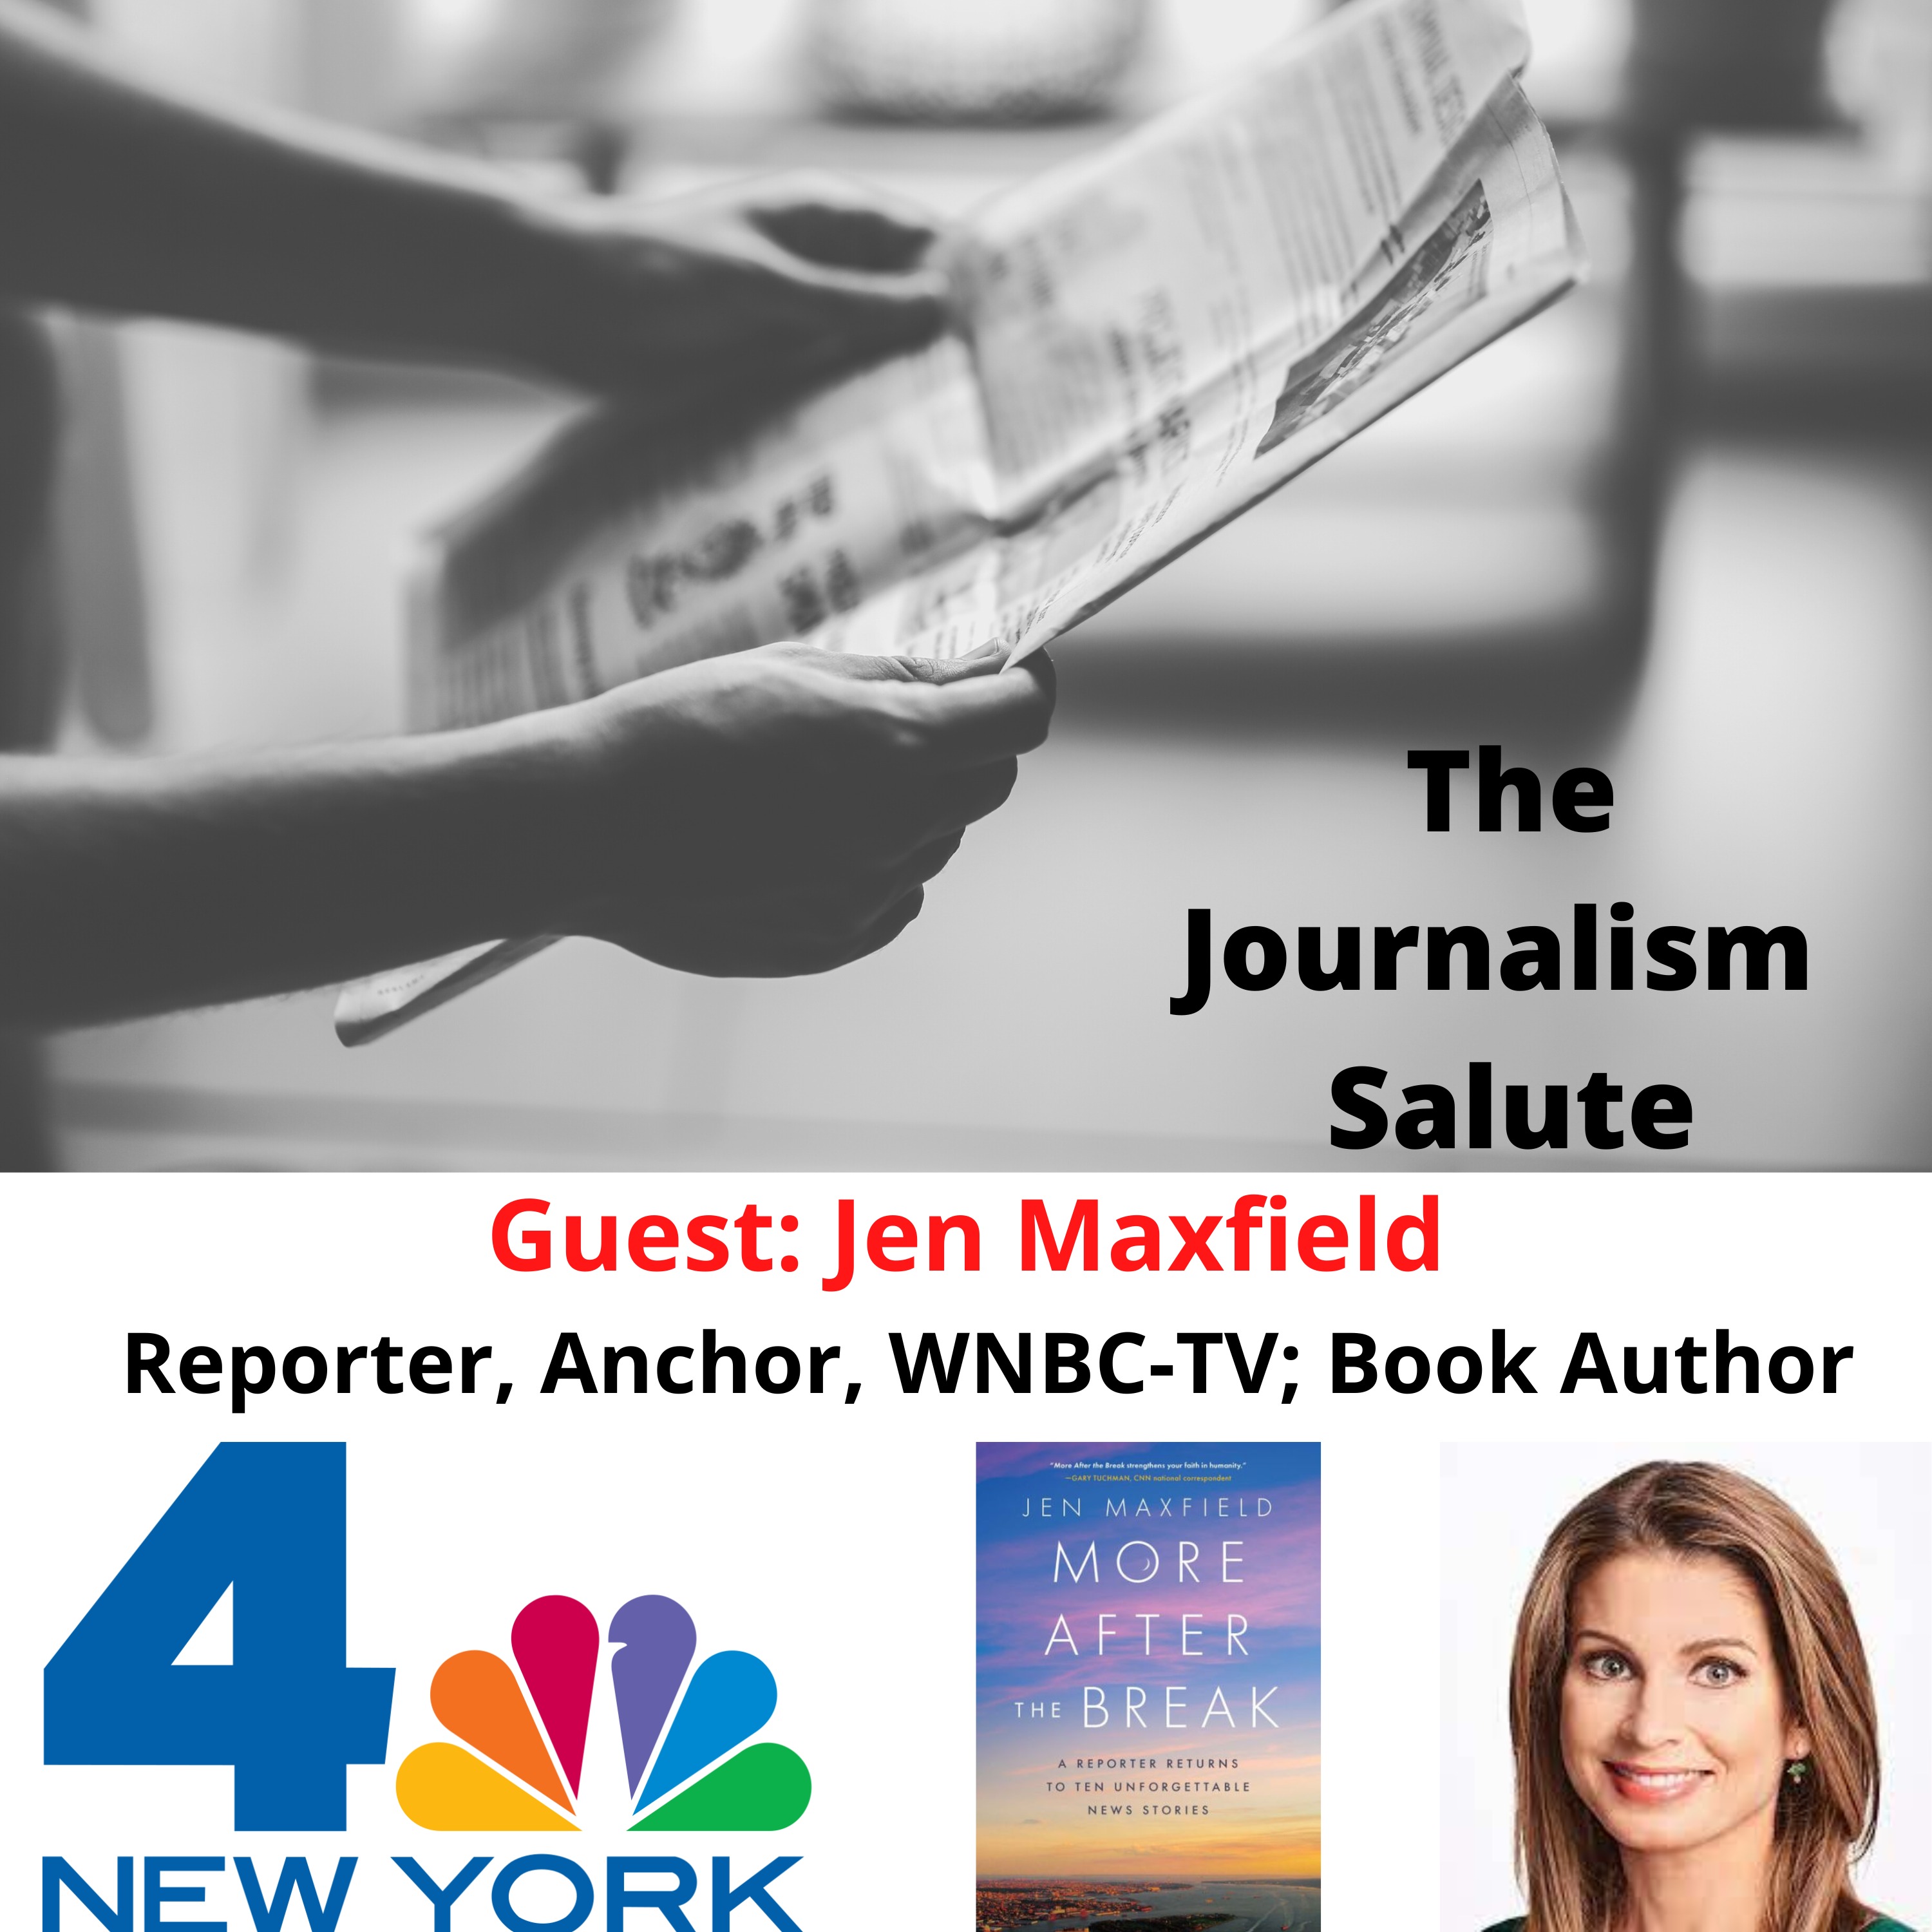 Jen Maxfield, WNBC-TV Reporter/Author ”More After The Break”